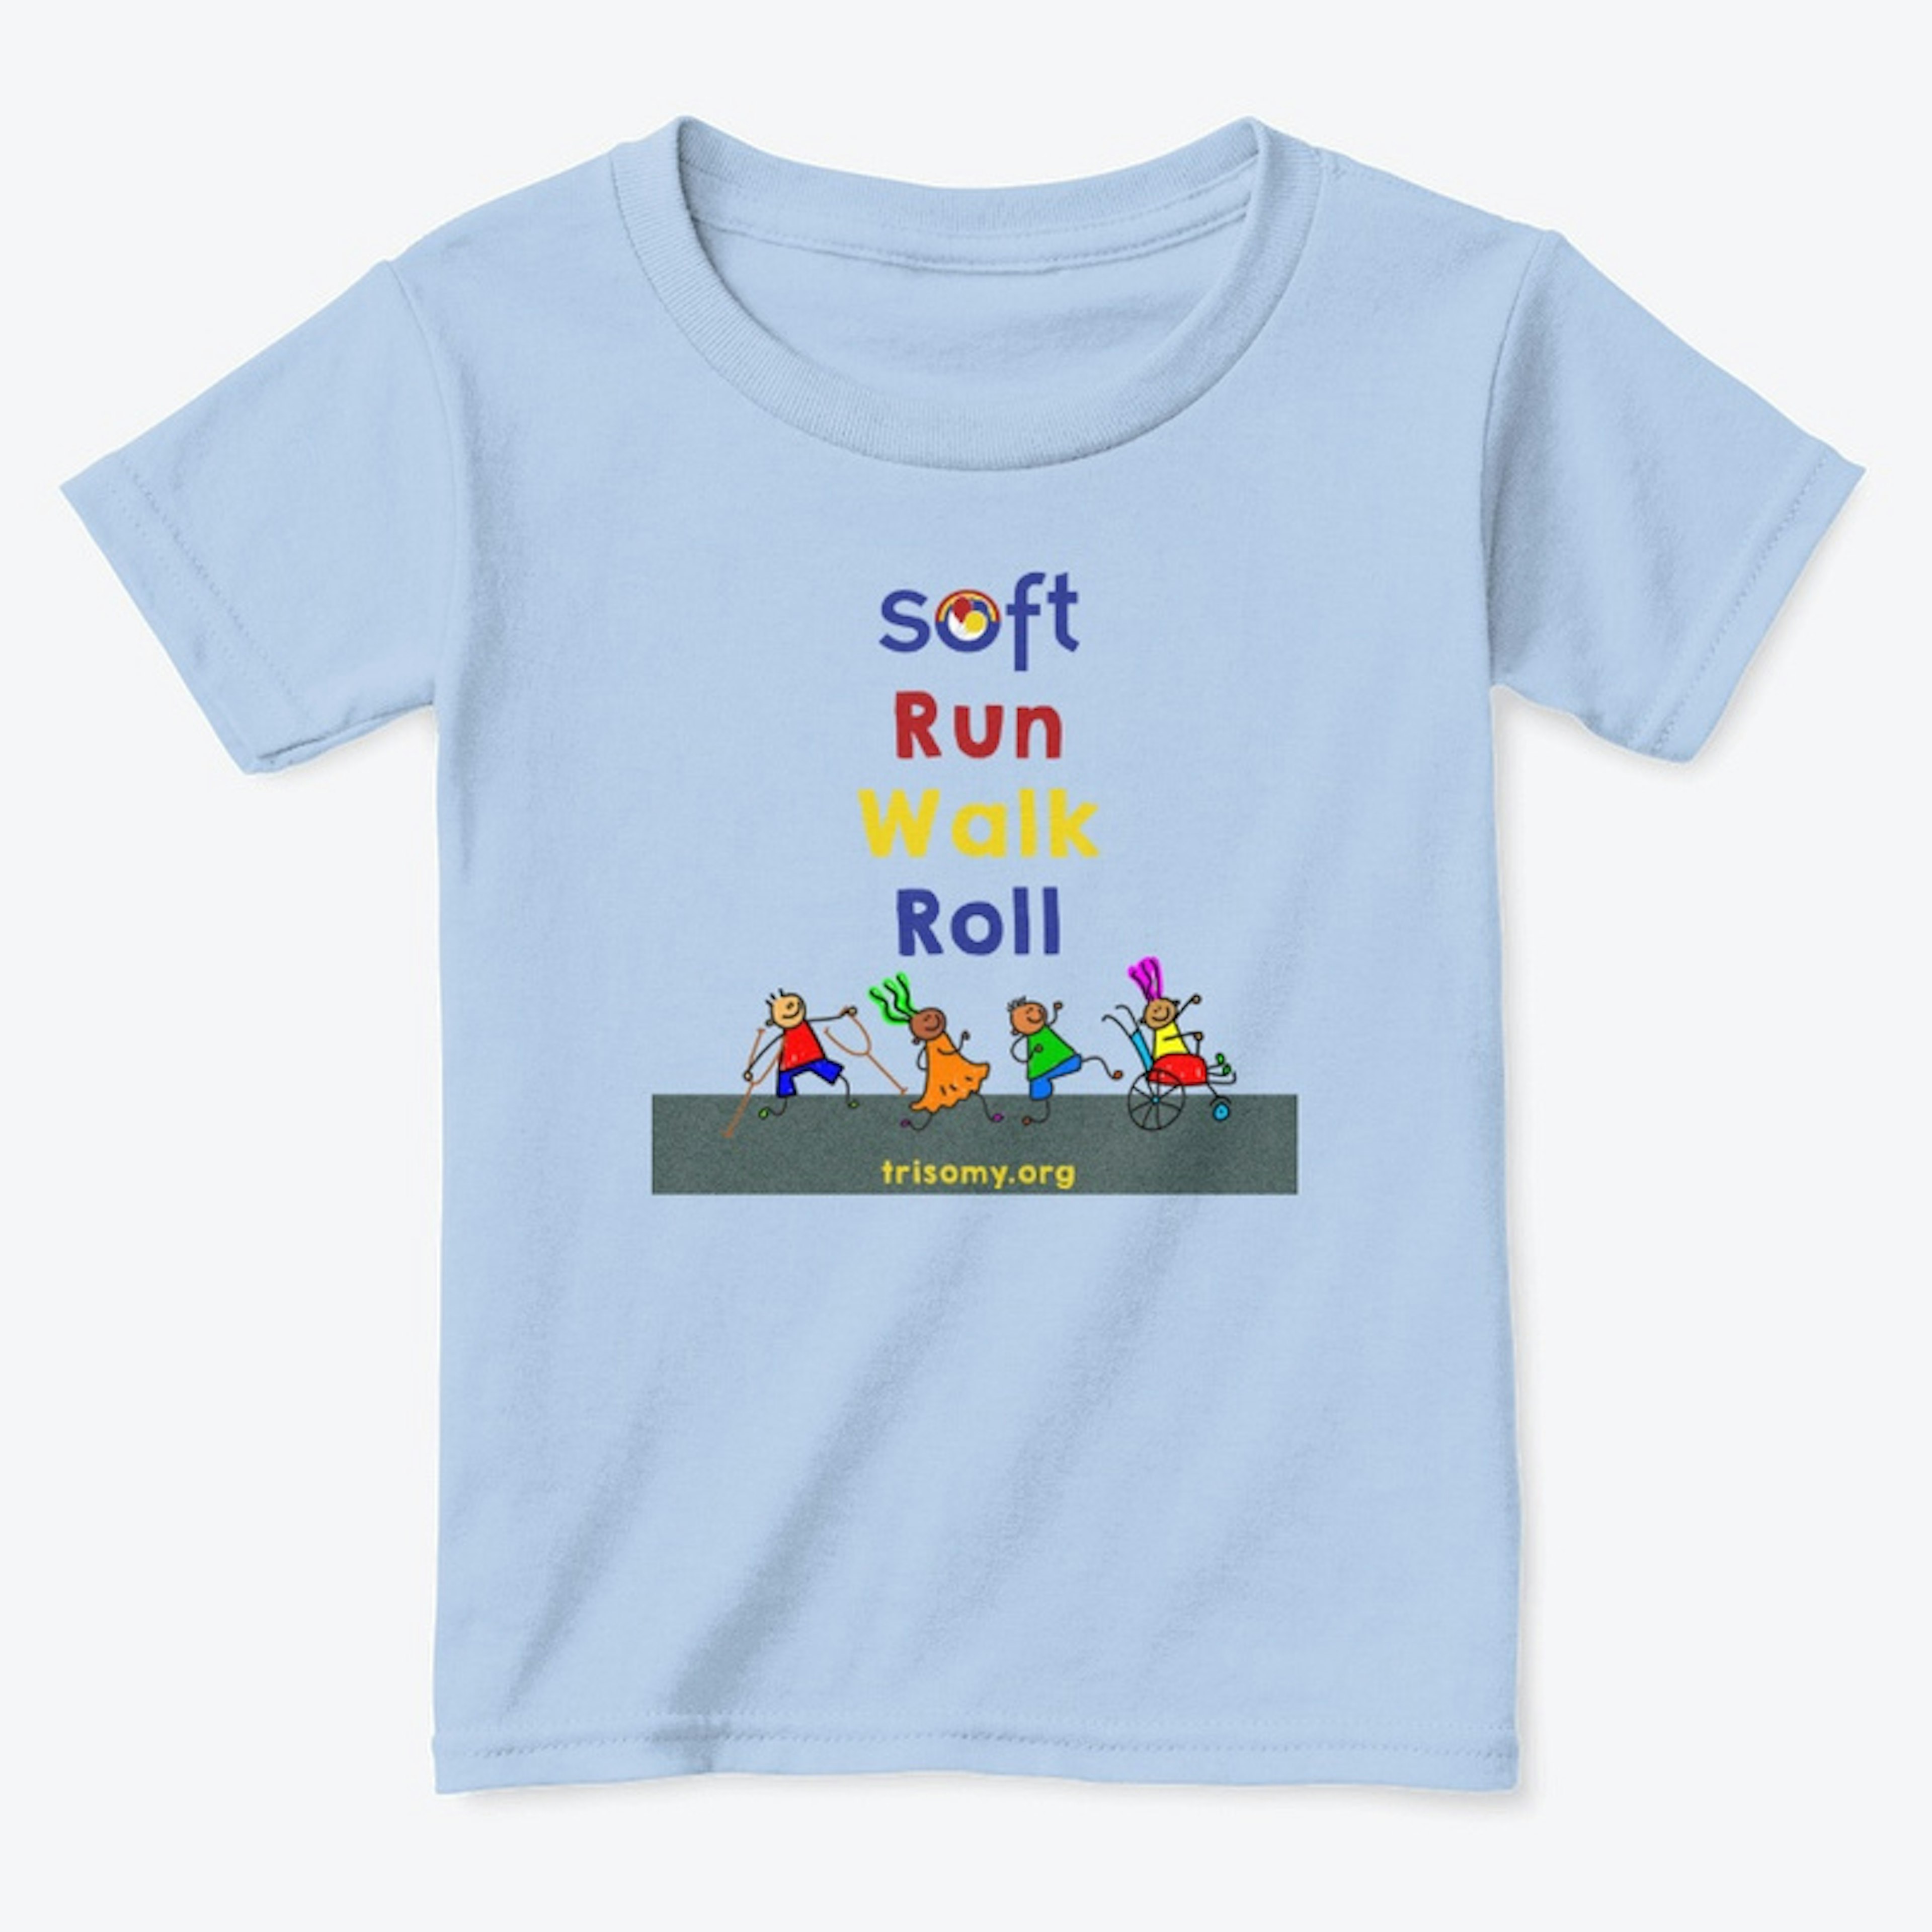 2021 SOFT Run Walk Roll shirt